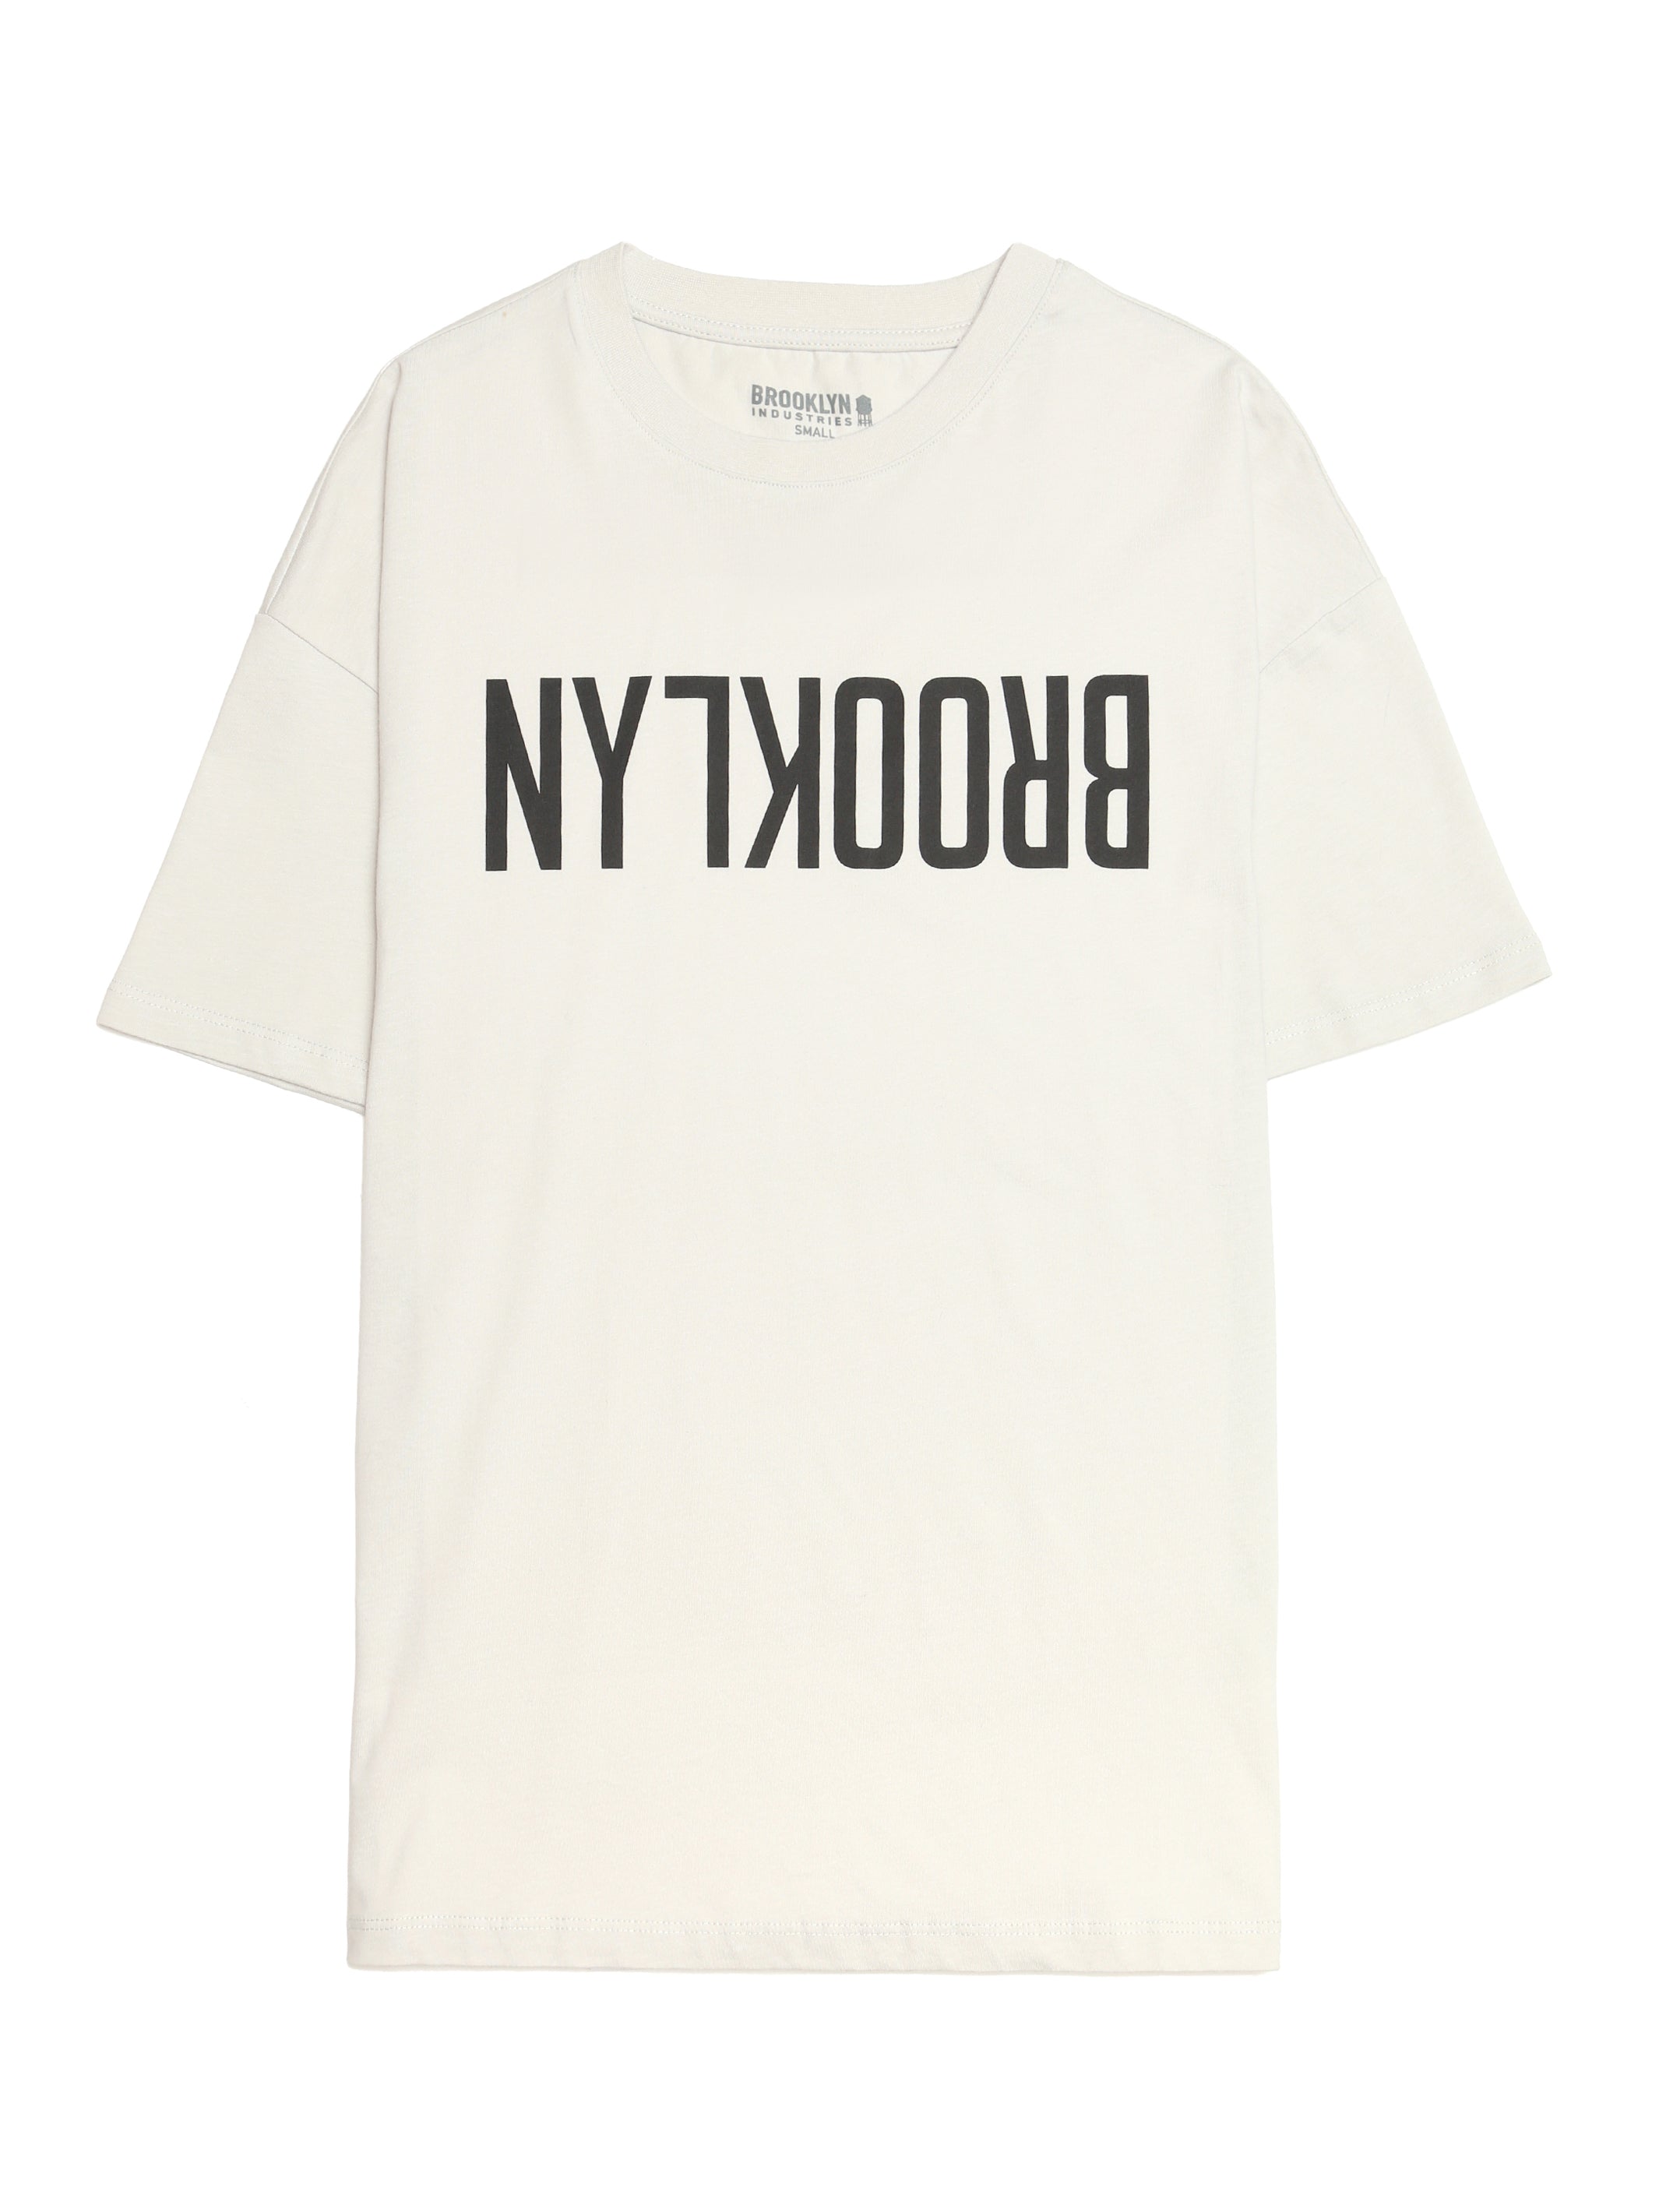  2-Kuhl Womens Burnout Brooklyn Graphic T-Shirt, White